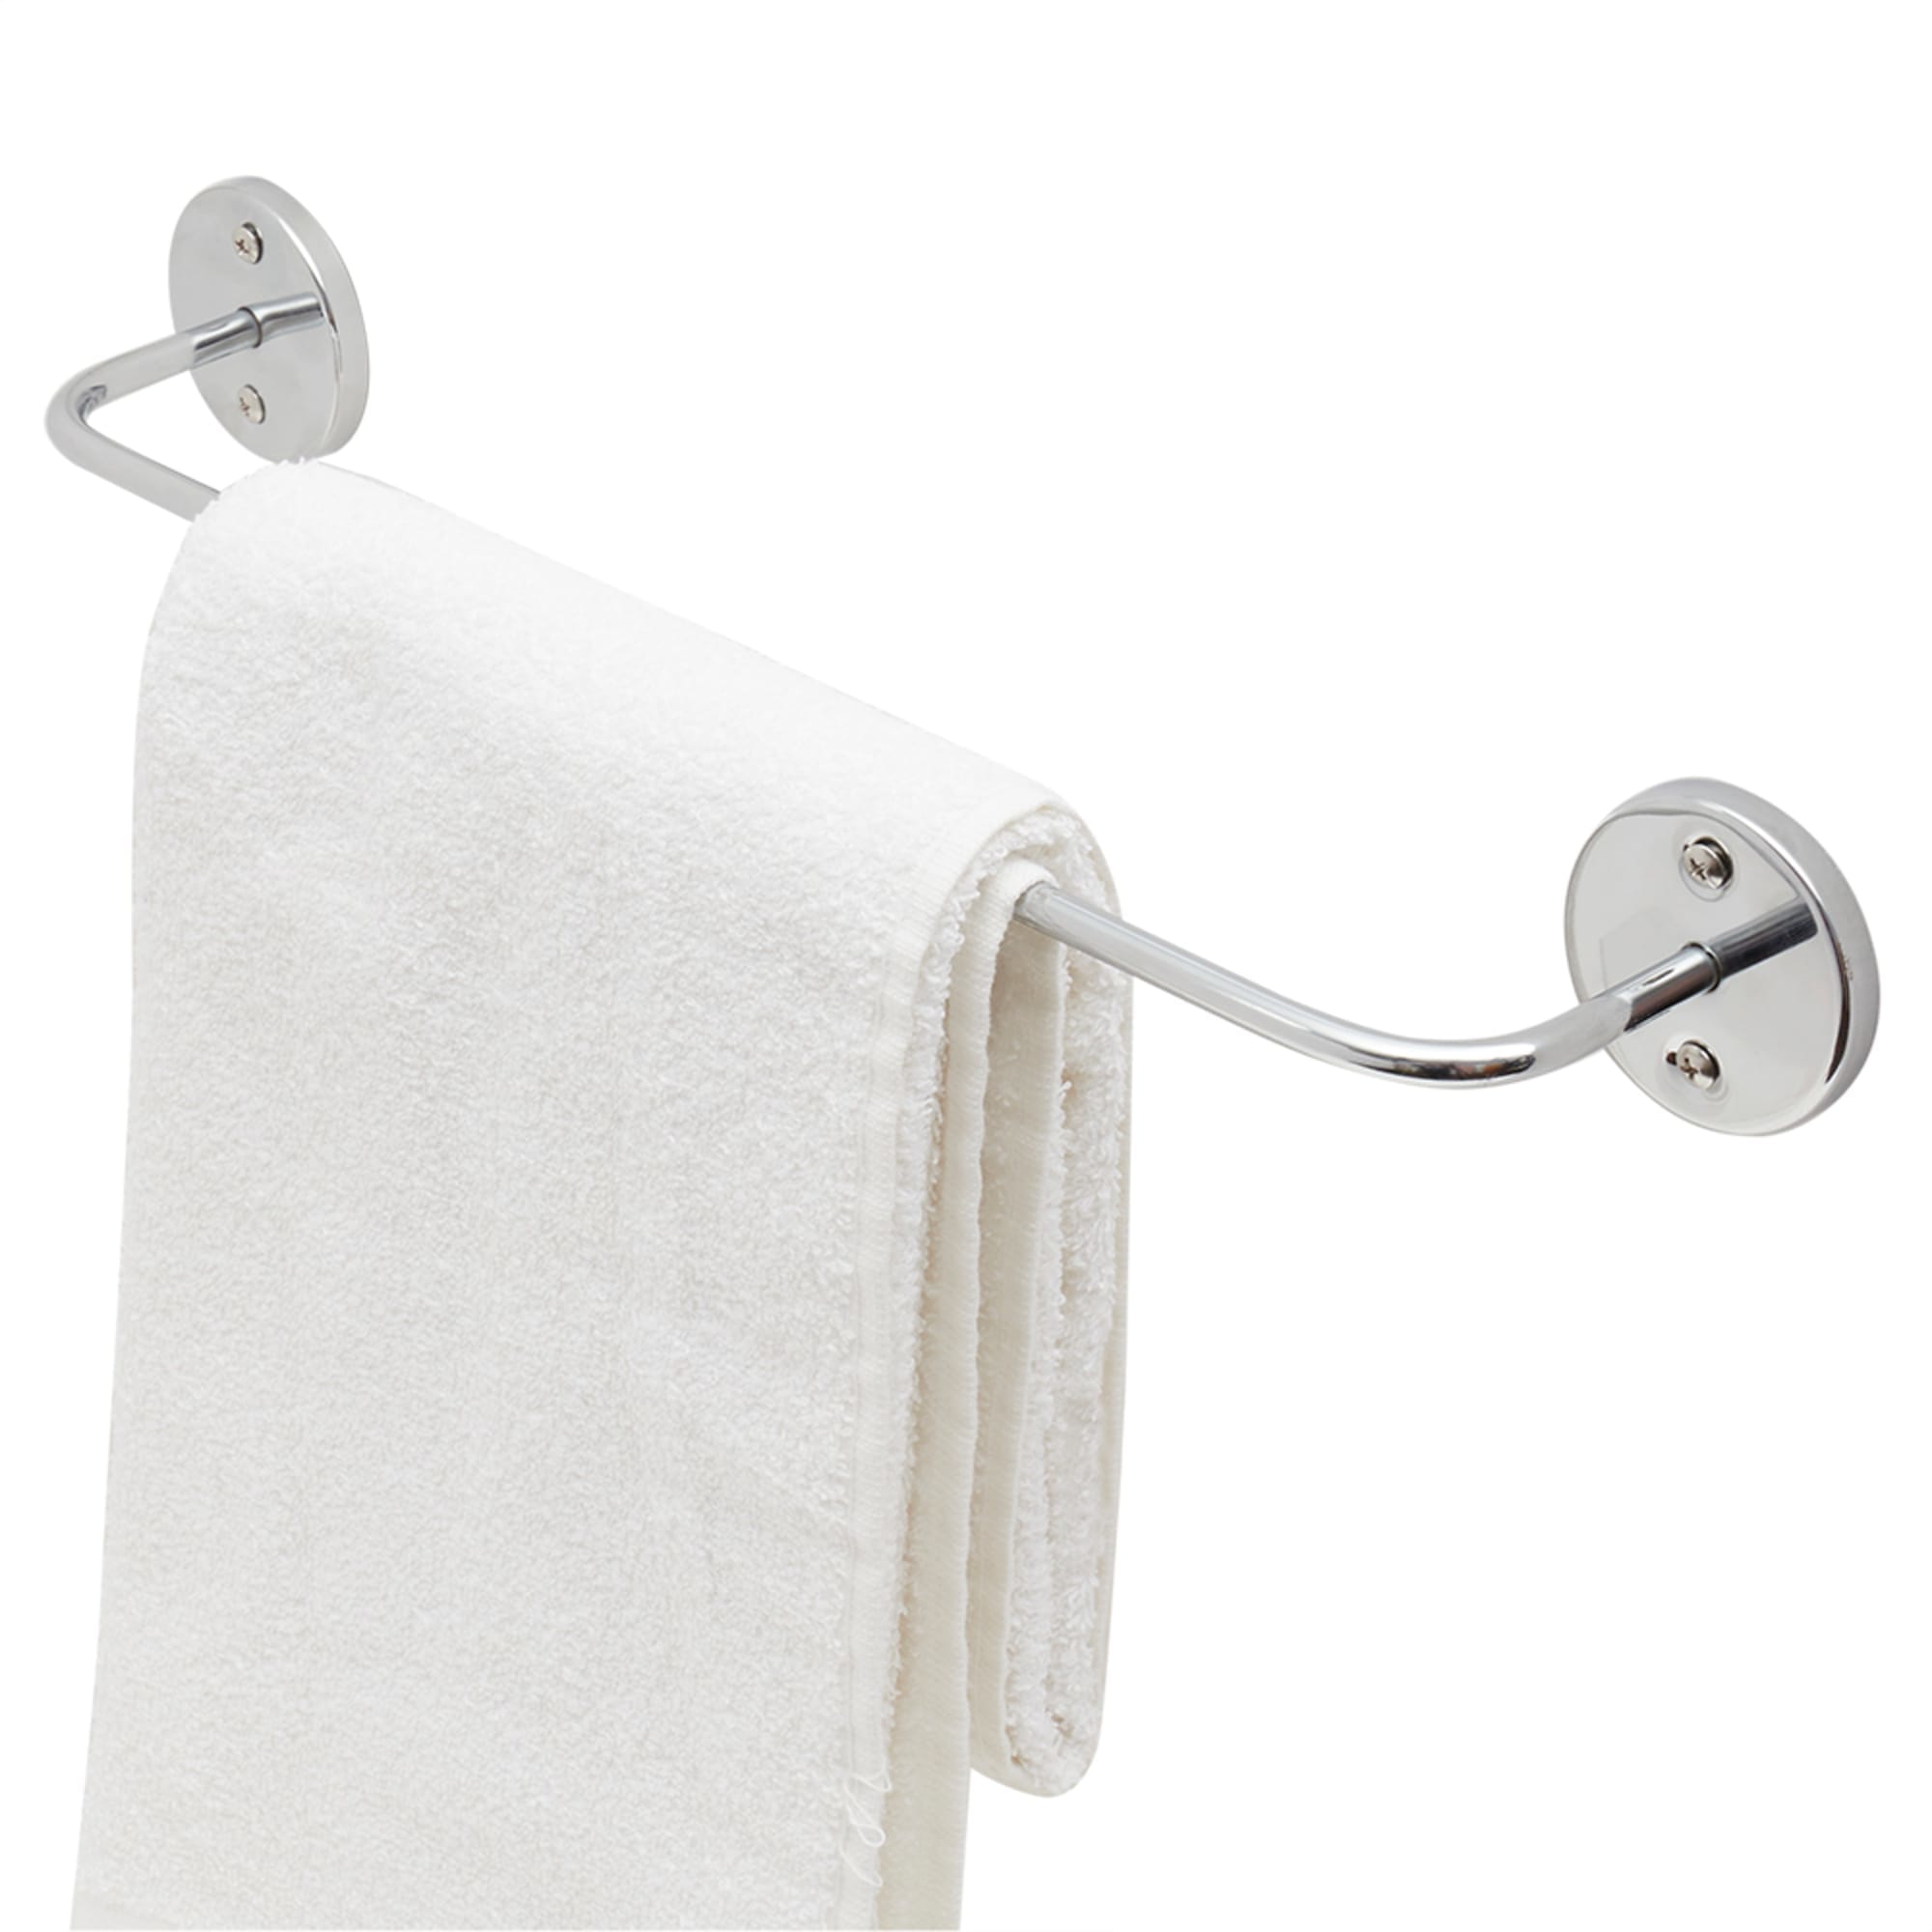 Home Basics Chelsea 18-inch Towel Bar $5.00 EACH, CASE PACK OF 12